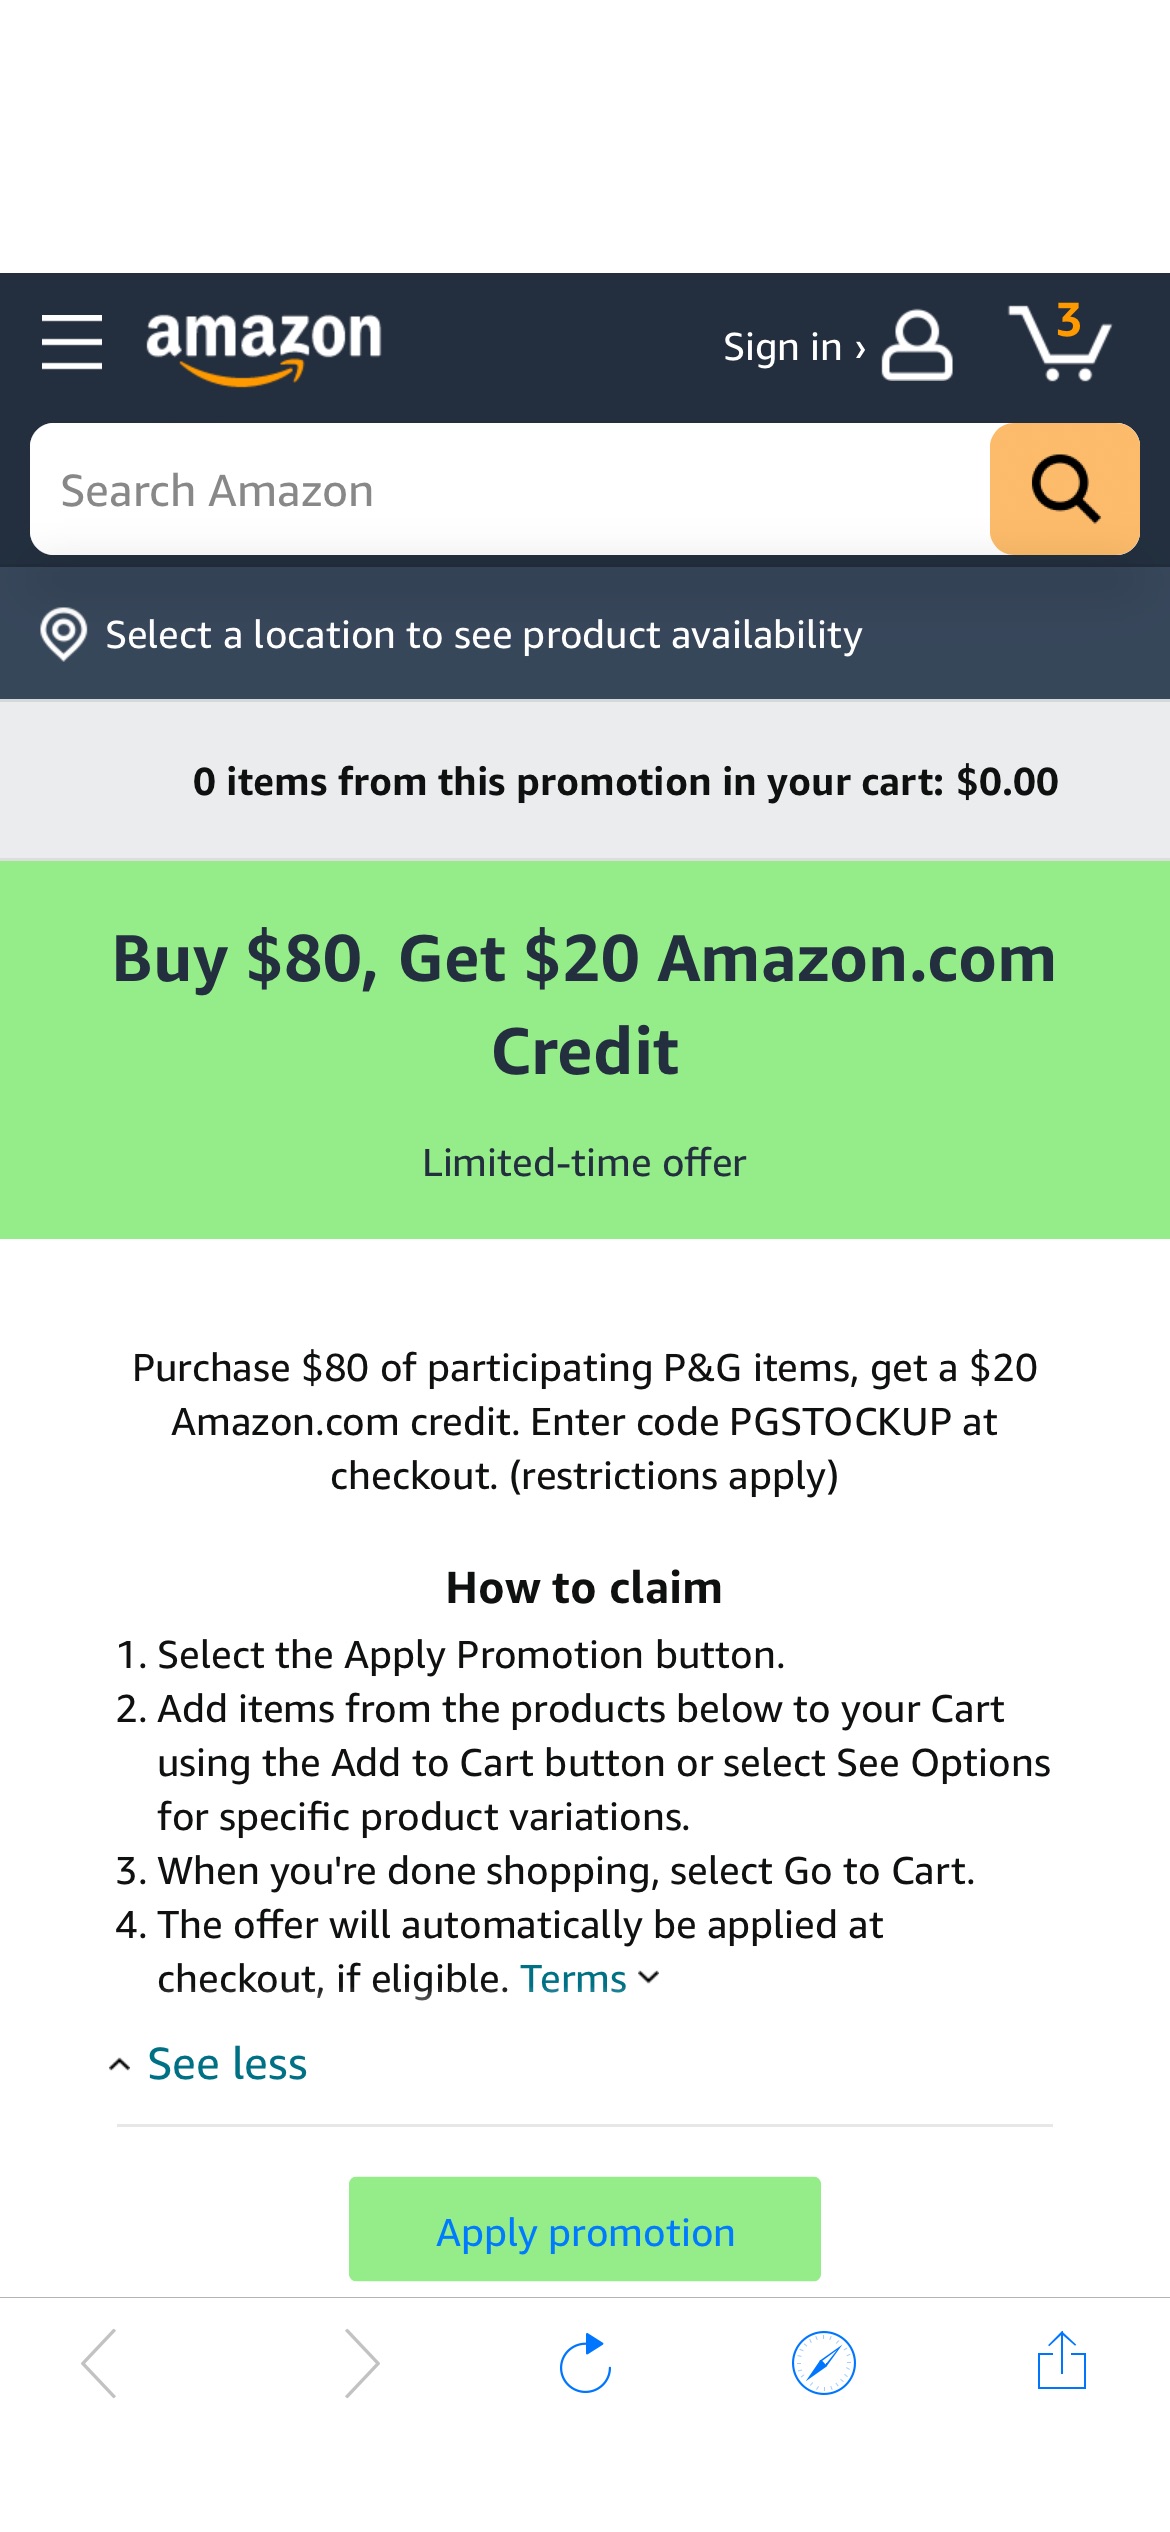 Amazon.com: Buy $80, Get $20 Amazon.com Credit promotion